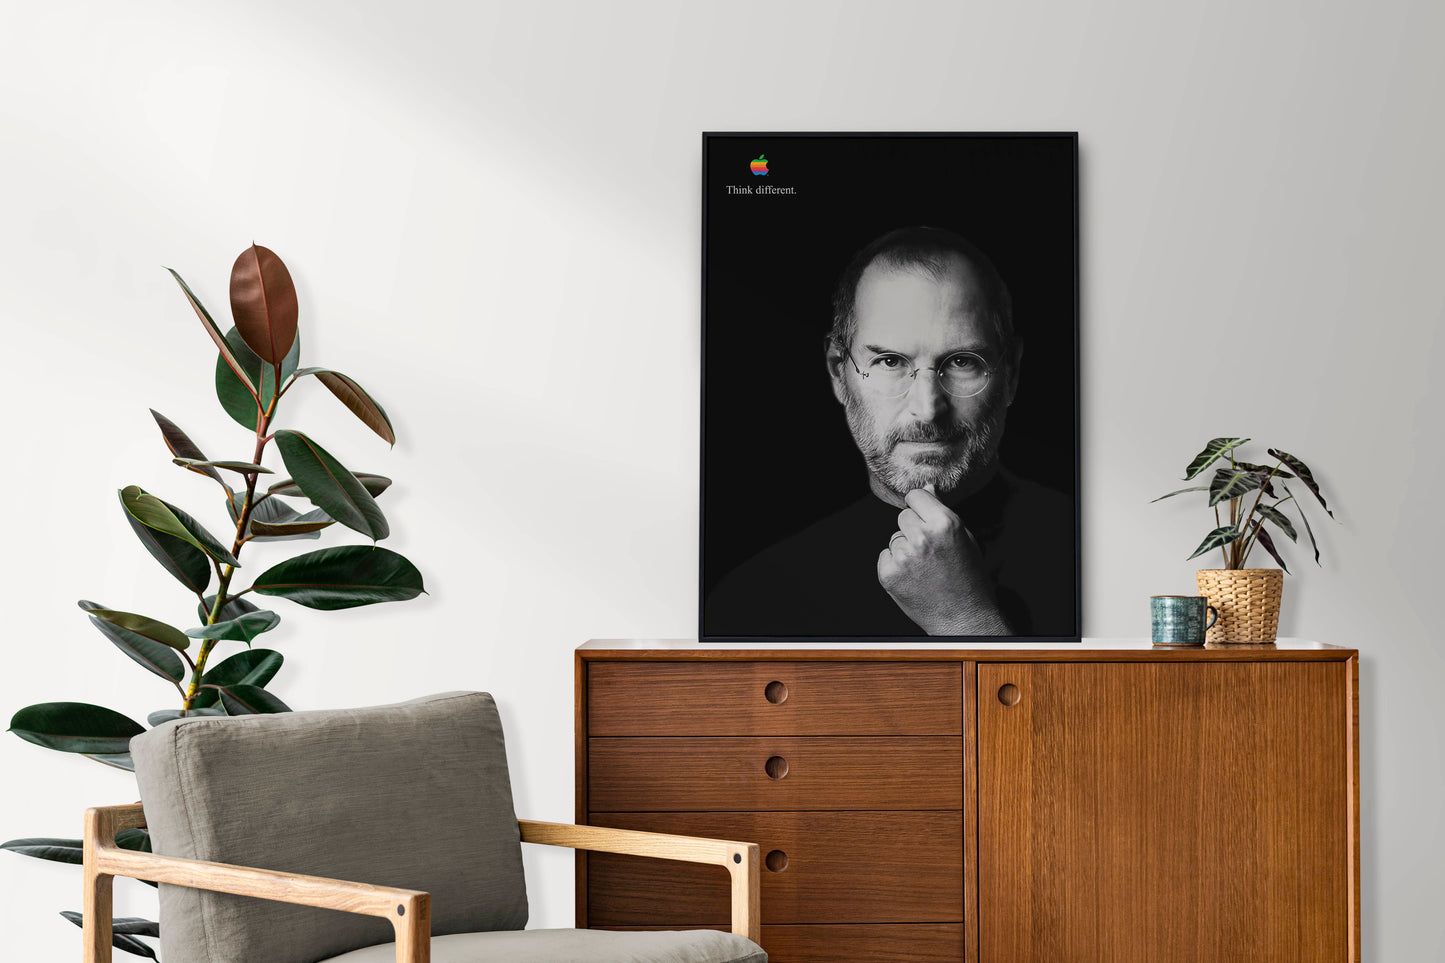 Apple Steve Jobs "Think Different" Poster